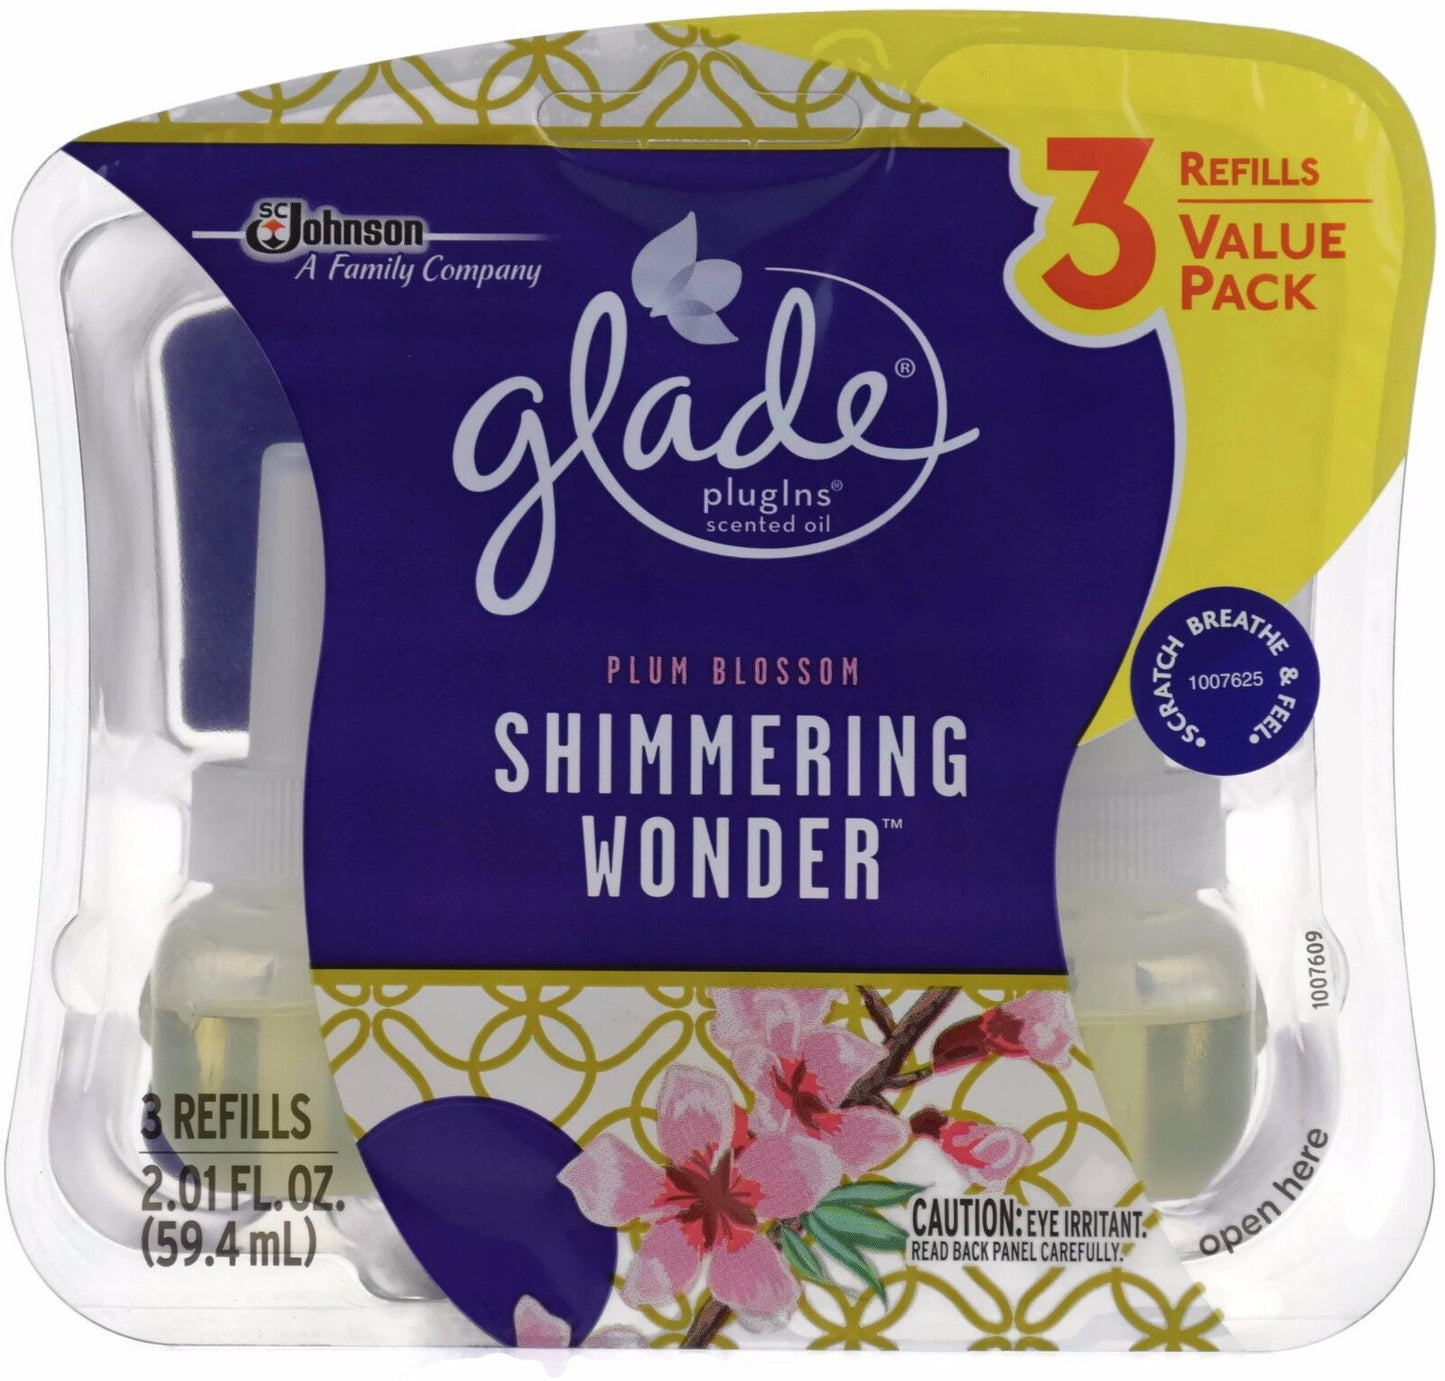 3x Glade Essential Plum Blossom Shimmering Wonder Scented Oil Plug In Refills